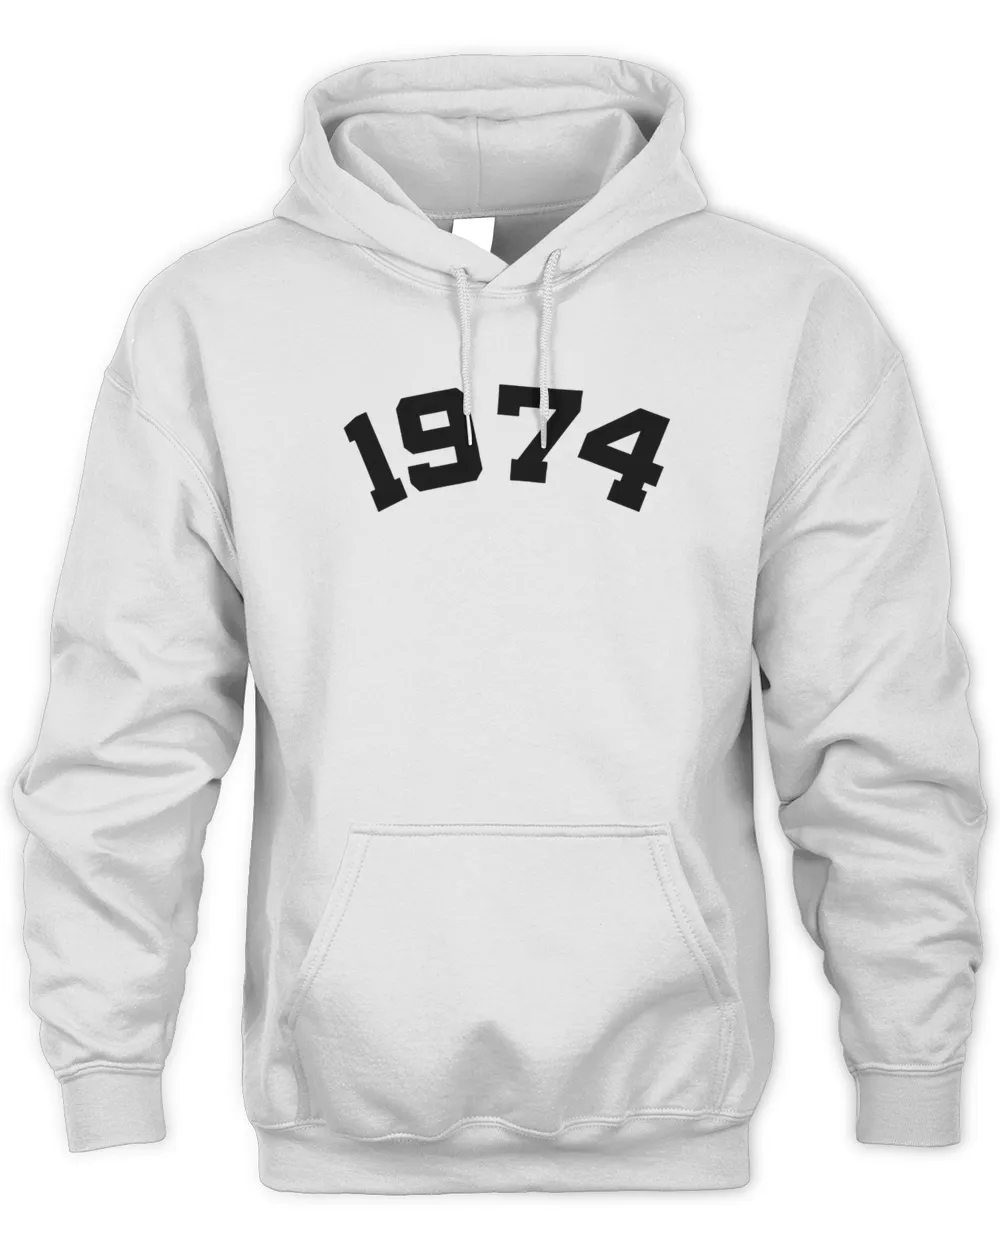 1974 Sweatshirt 50th Birthday Sweatshirt